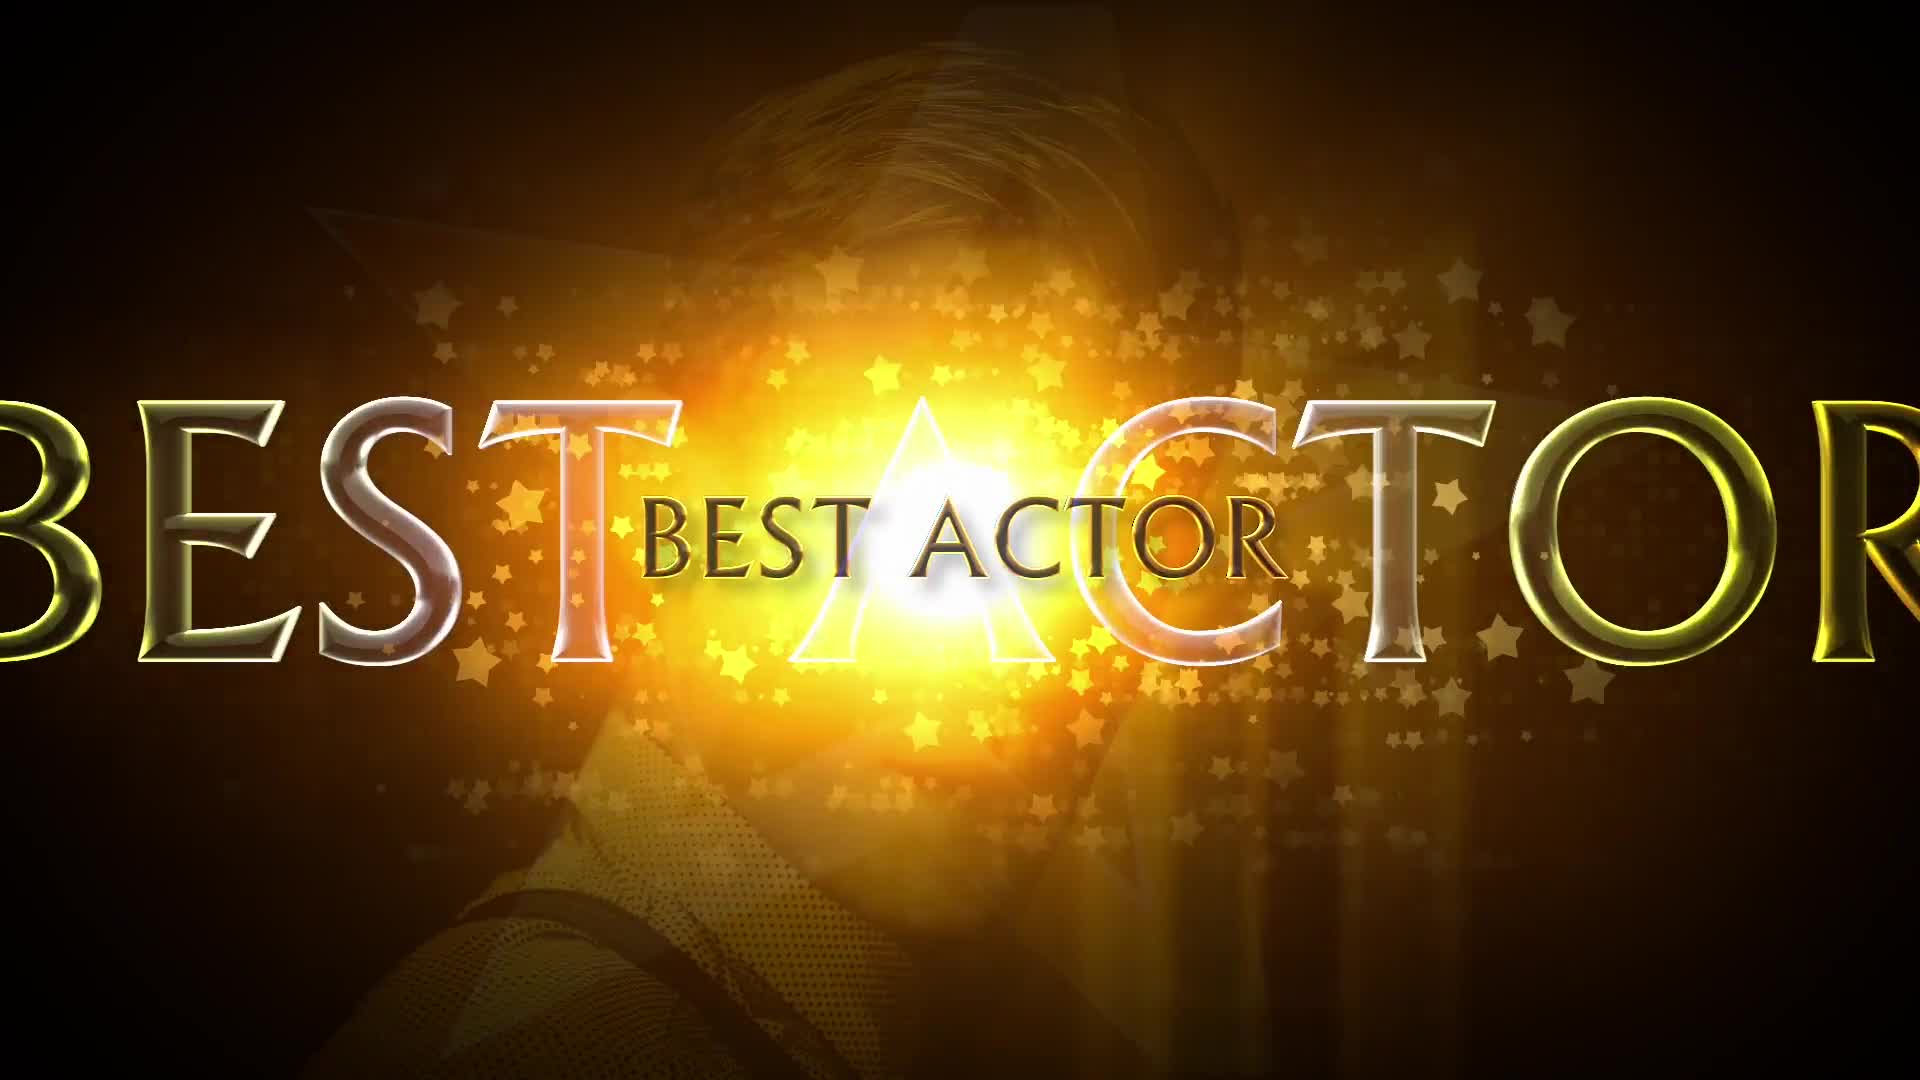 Golden Star Awards Broadcast Pack Apple Motion - Download Videohive 23372514